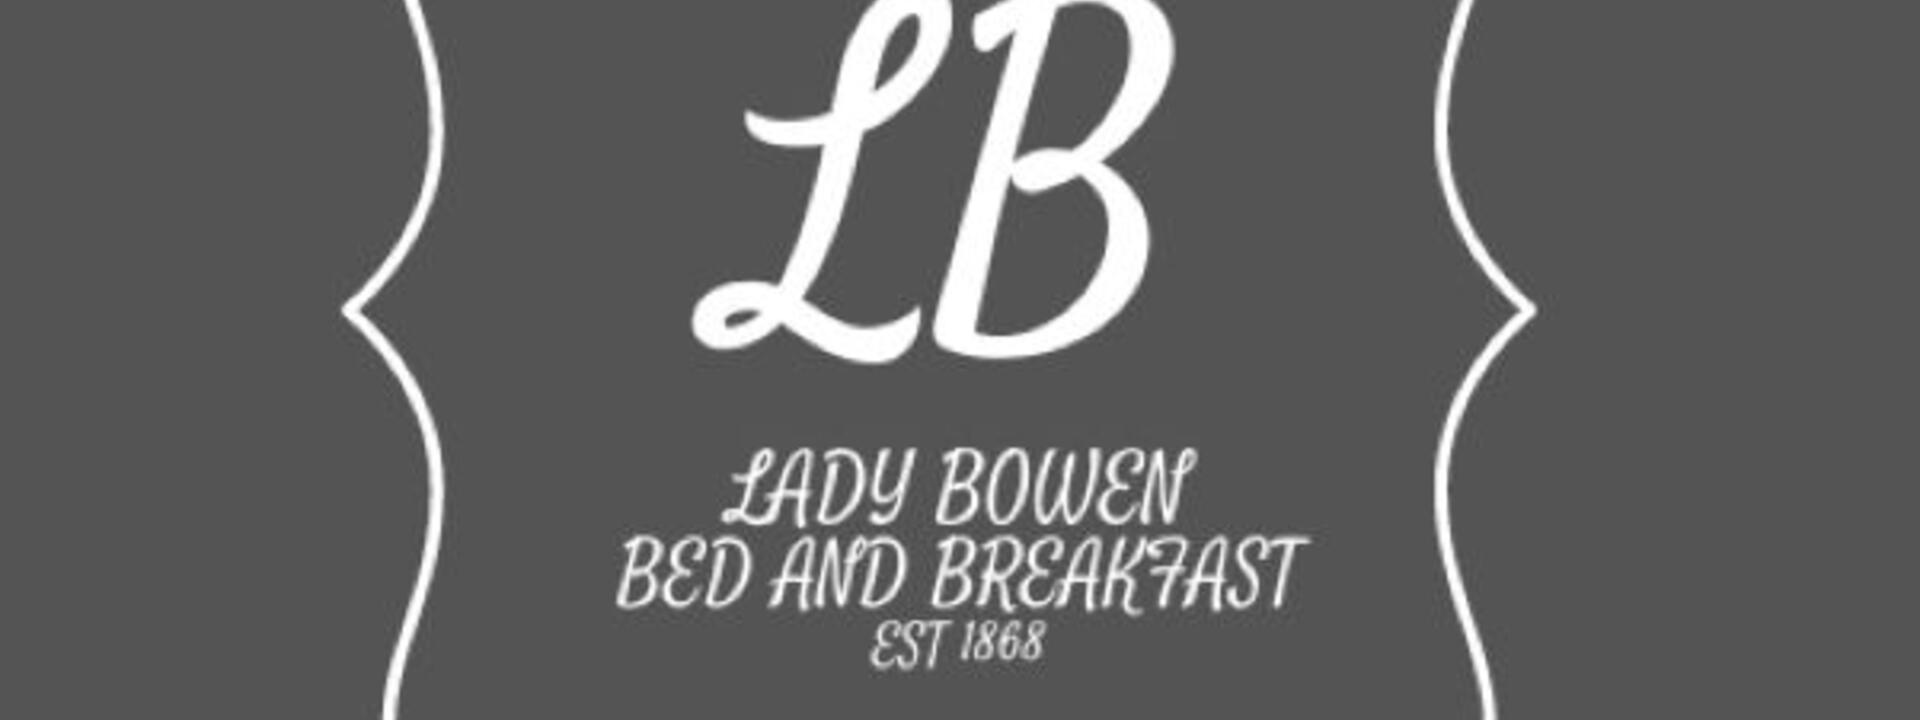 Lady Bowen Logo3 resized(1).jpg